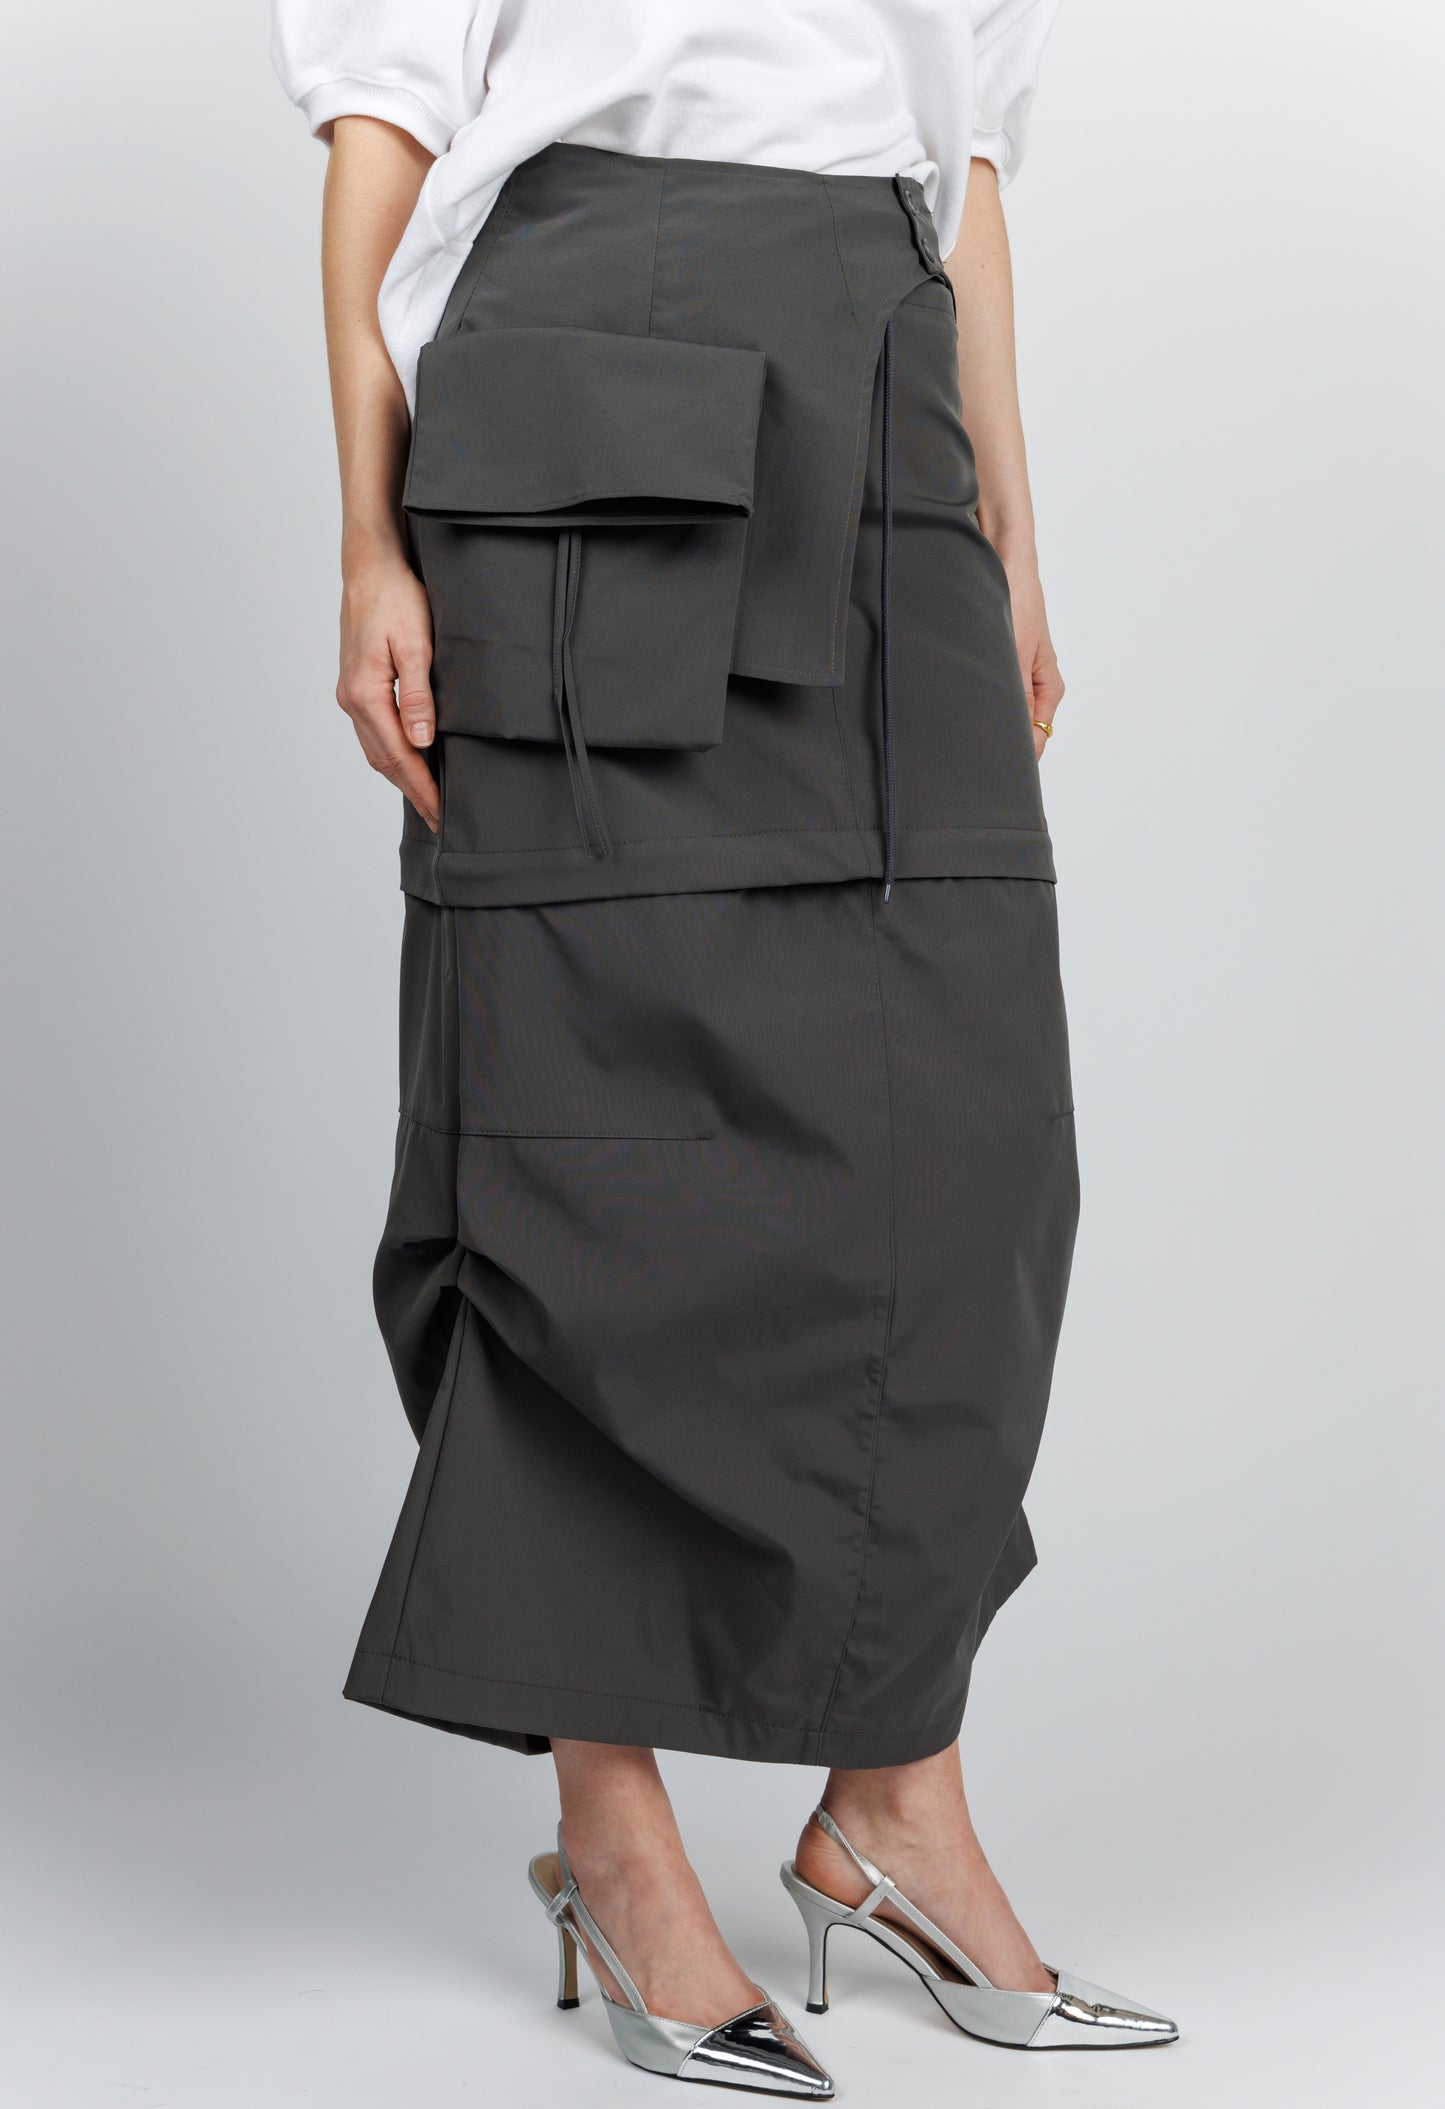 Versatile Utility Skirt in Grey